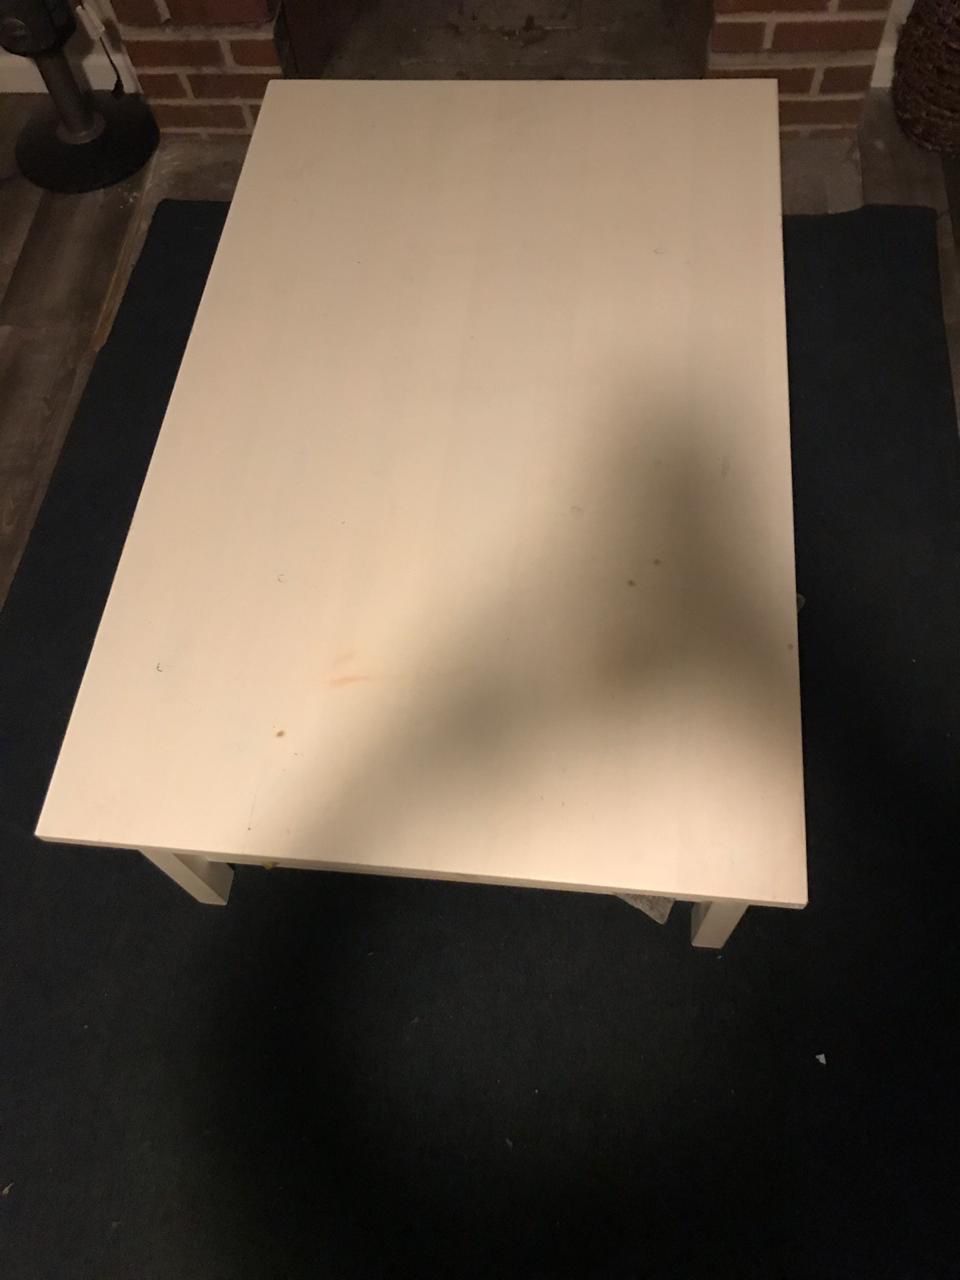 Ikea Coffee table